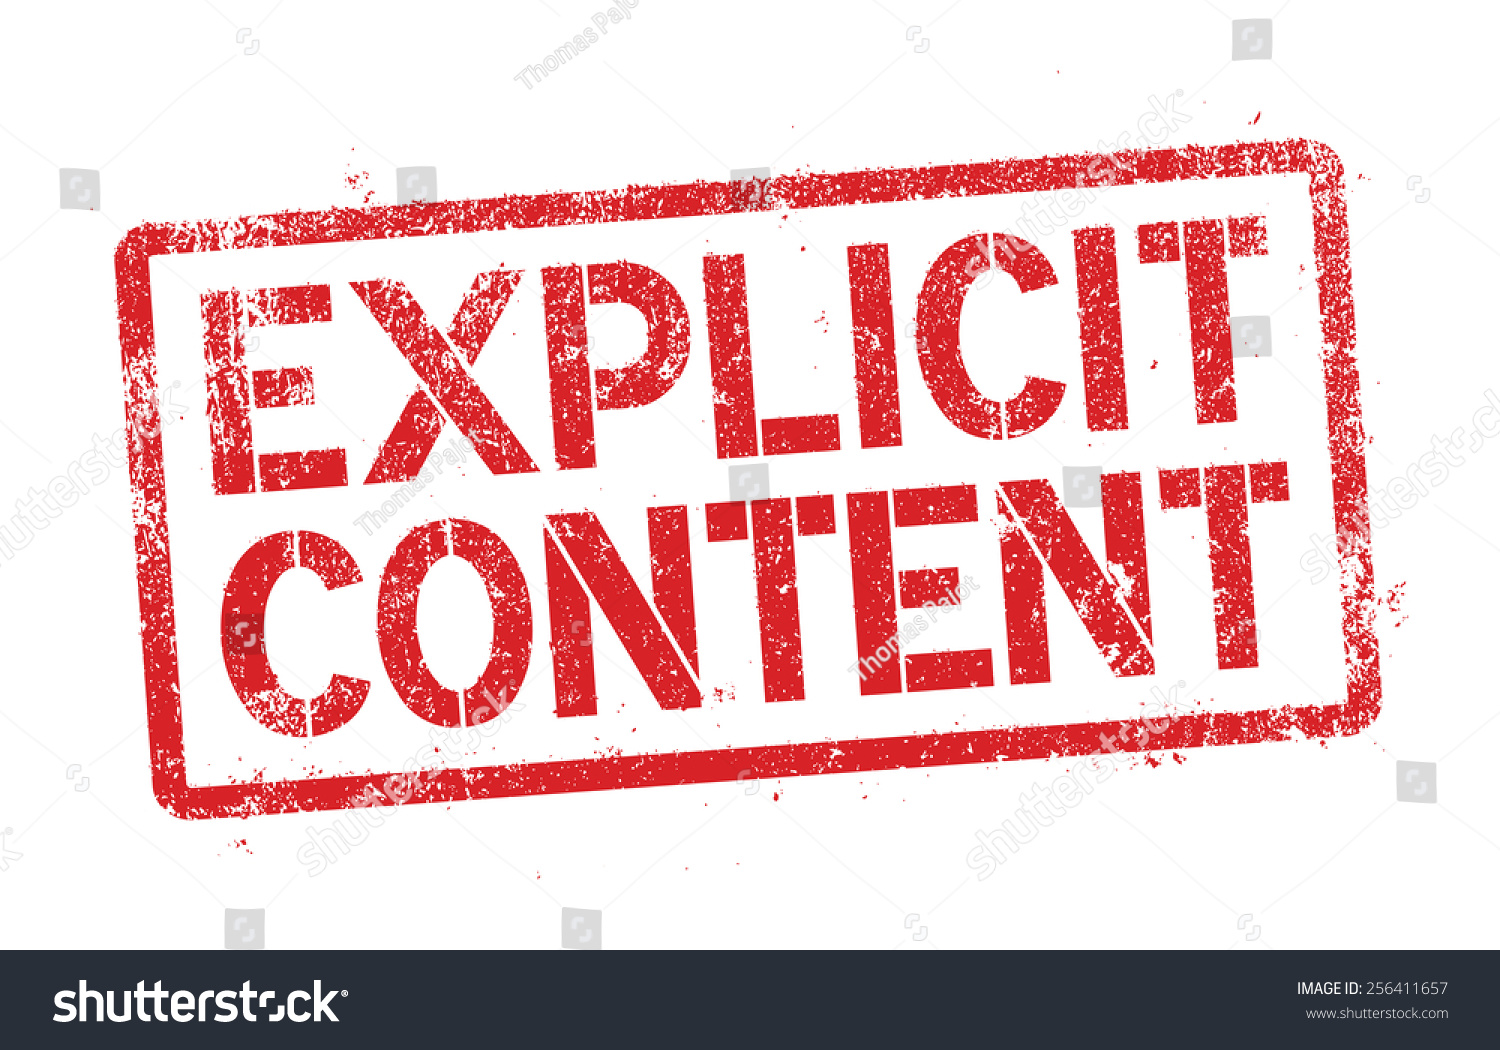 SVG of Explicit content svg